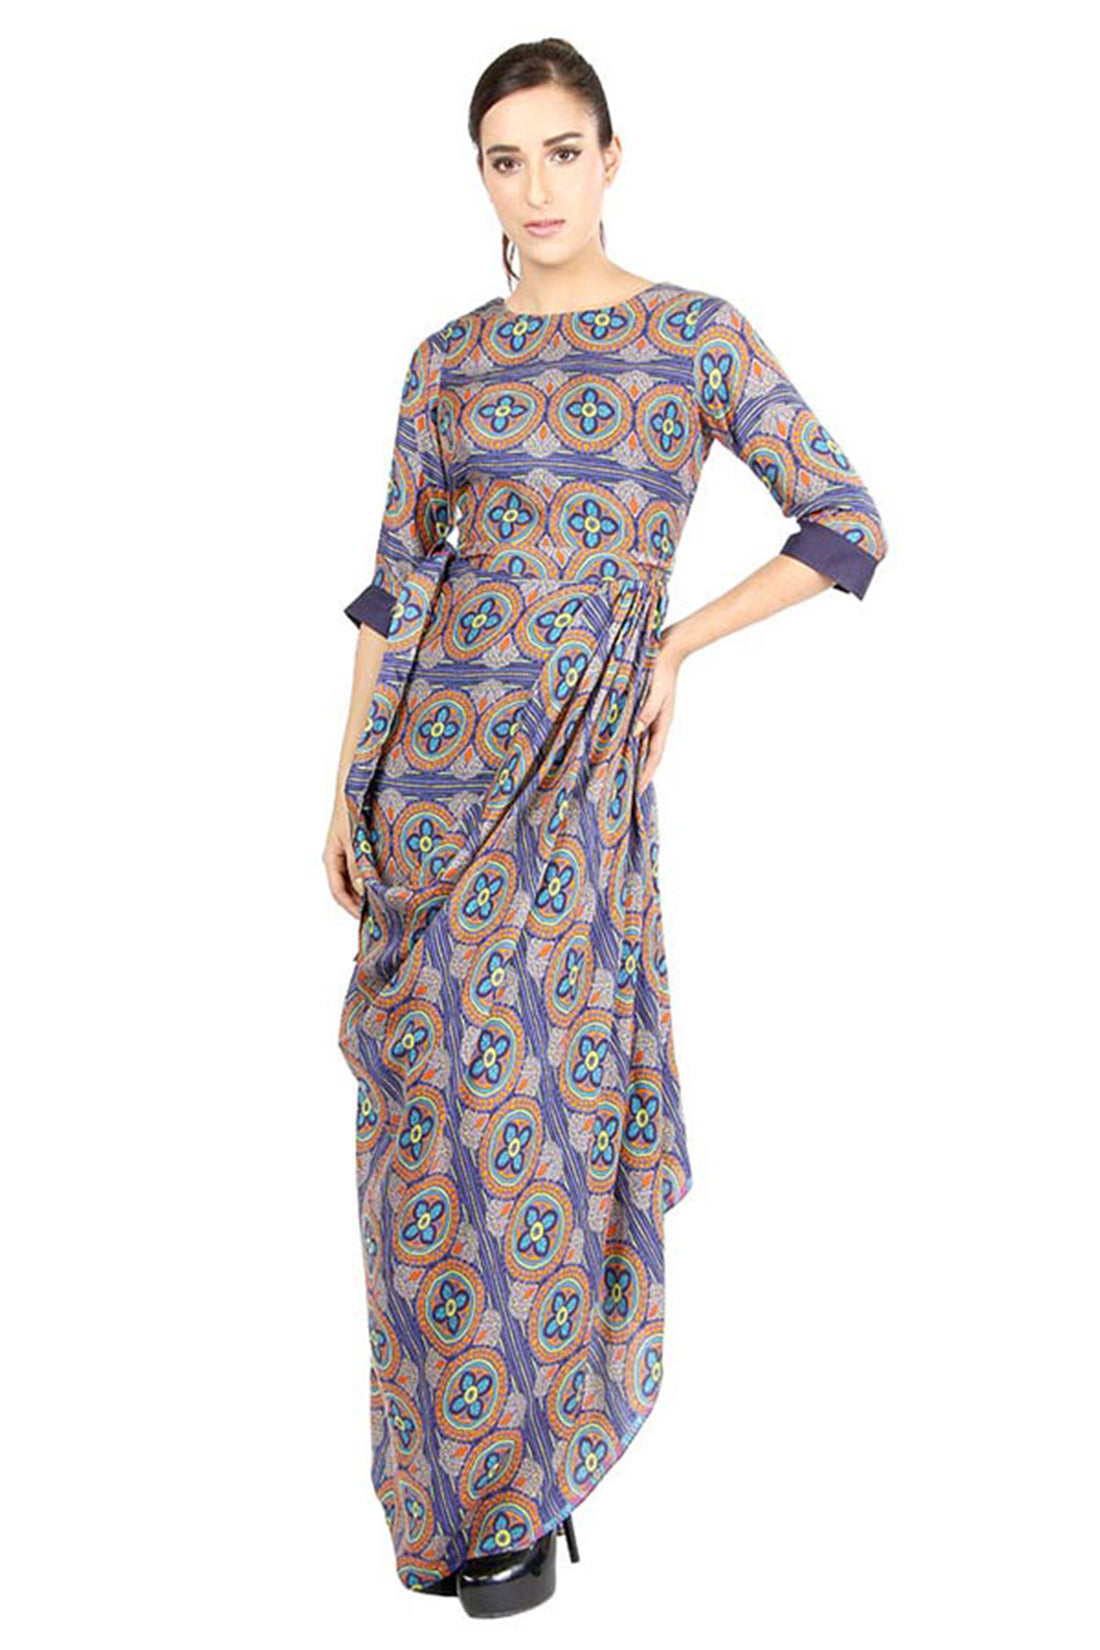 Azuleza Printed Drape Dress With Waist Tie-Up